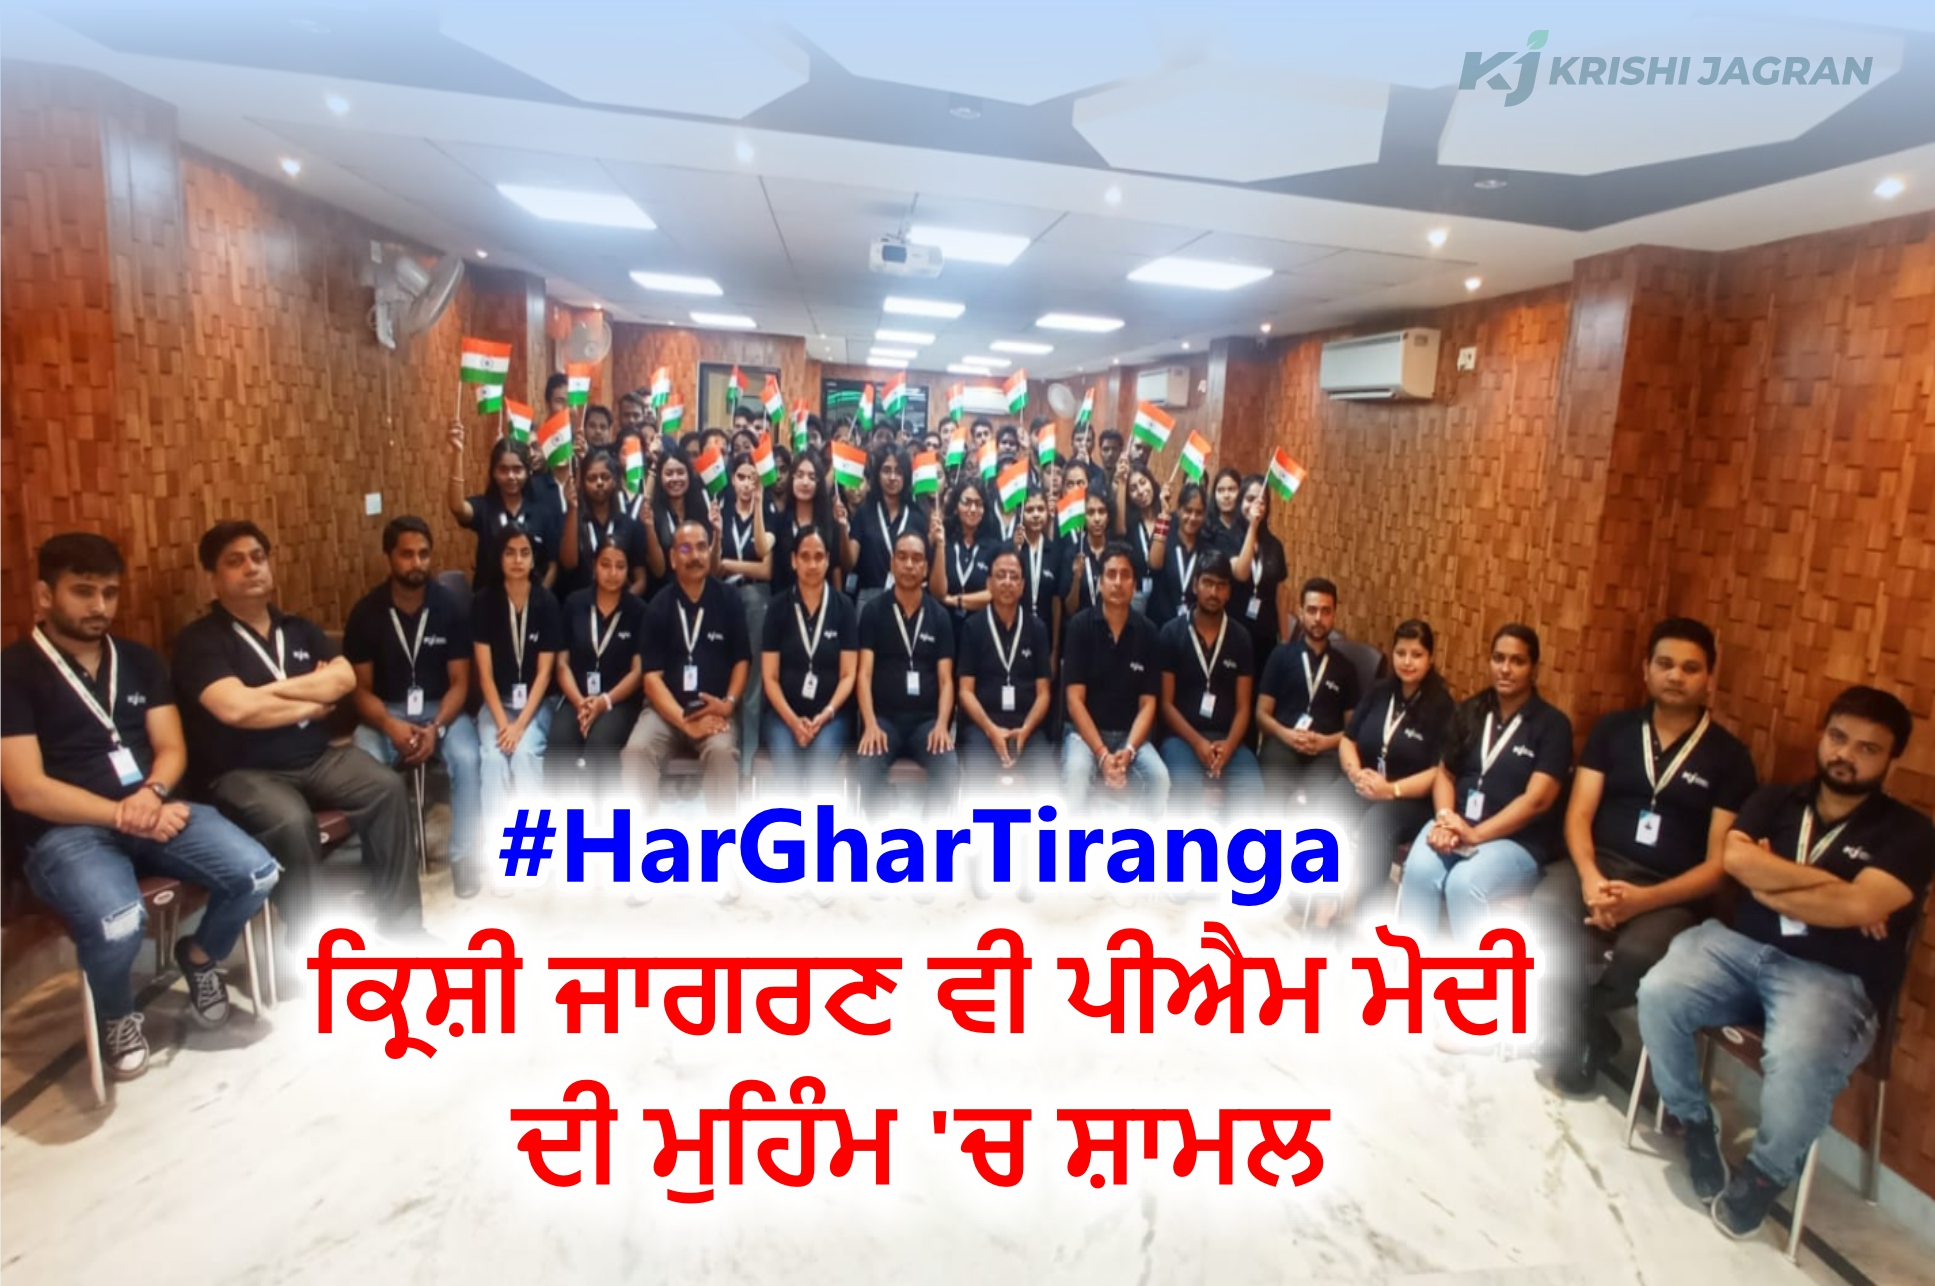 ‘Har Ghar Tiranga’ movement